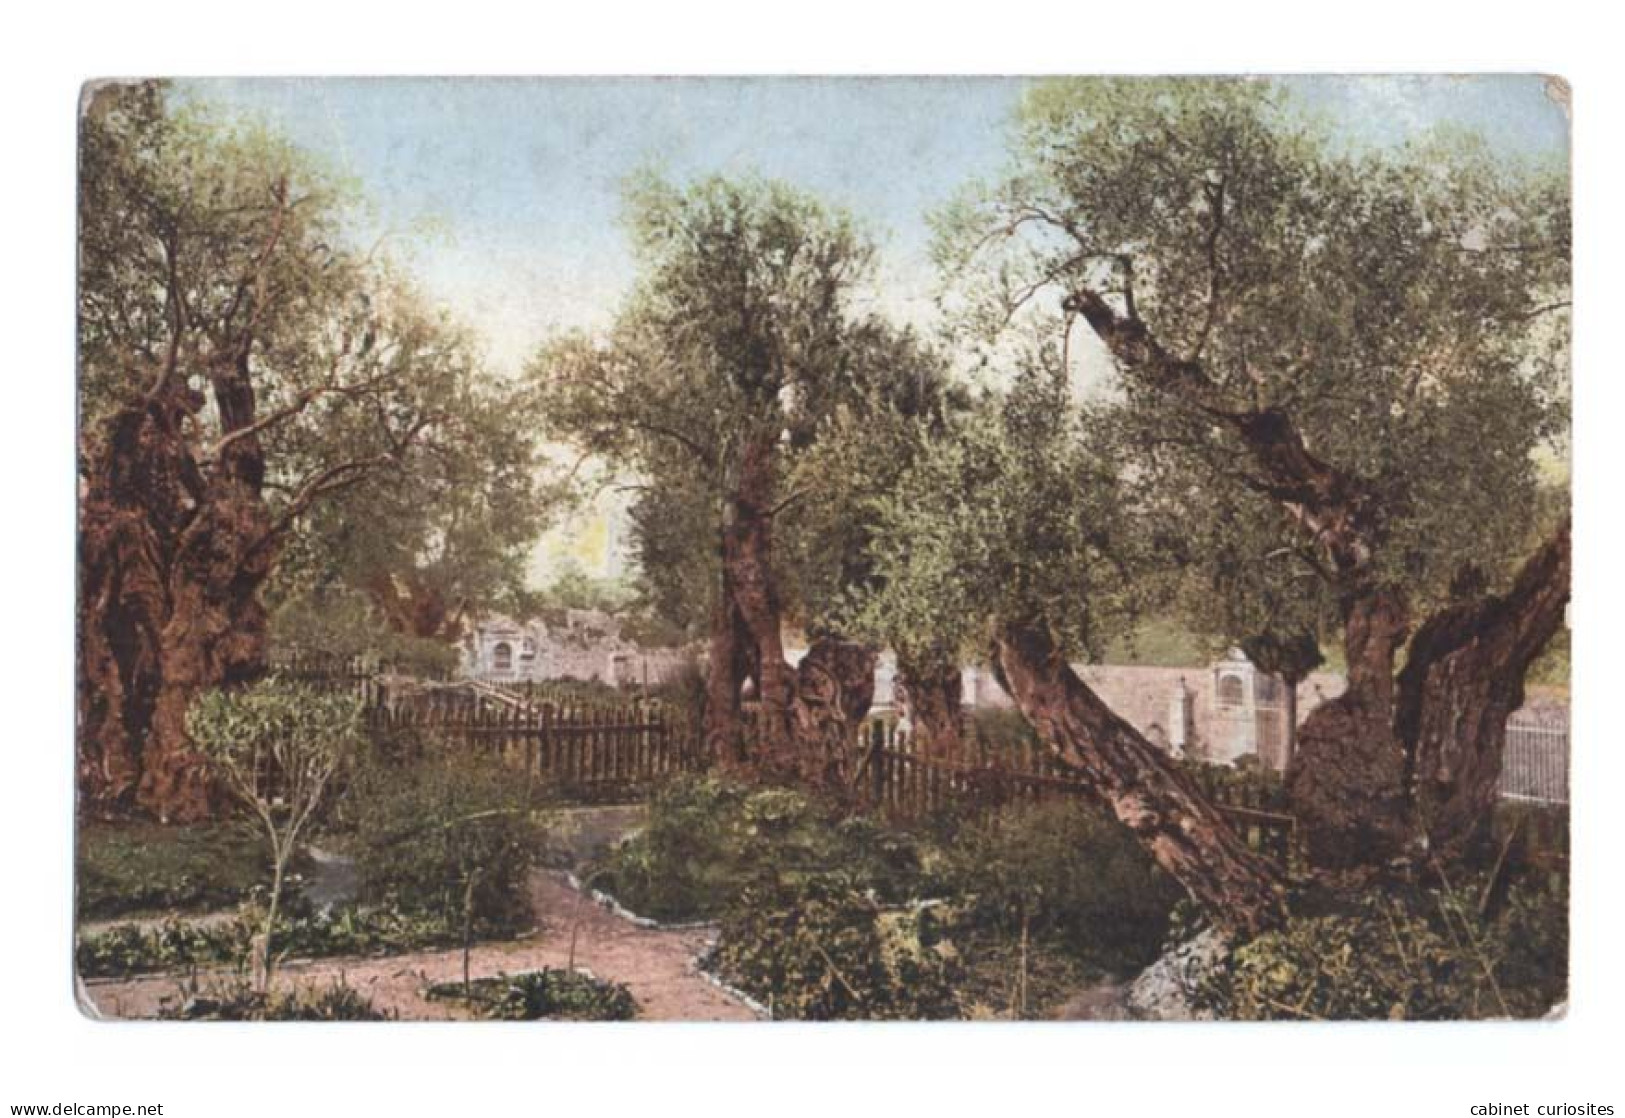 Jérusalem - Le Jardin De Gethsémani - Colorisée - Circulée En 1909 - Israel